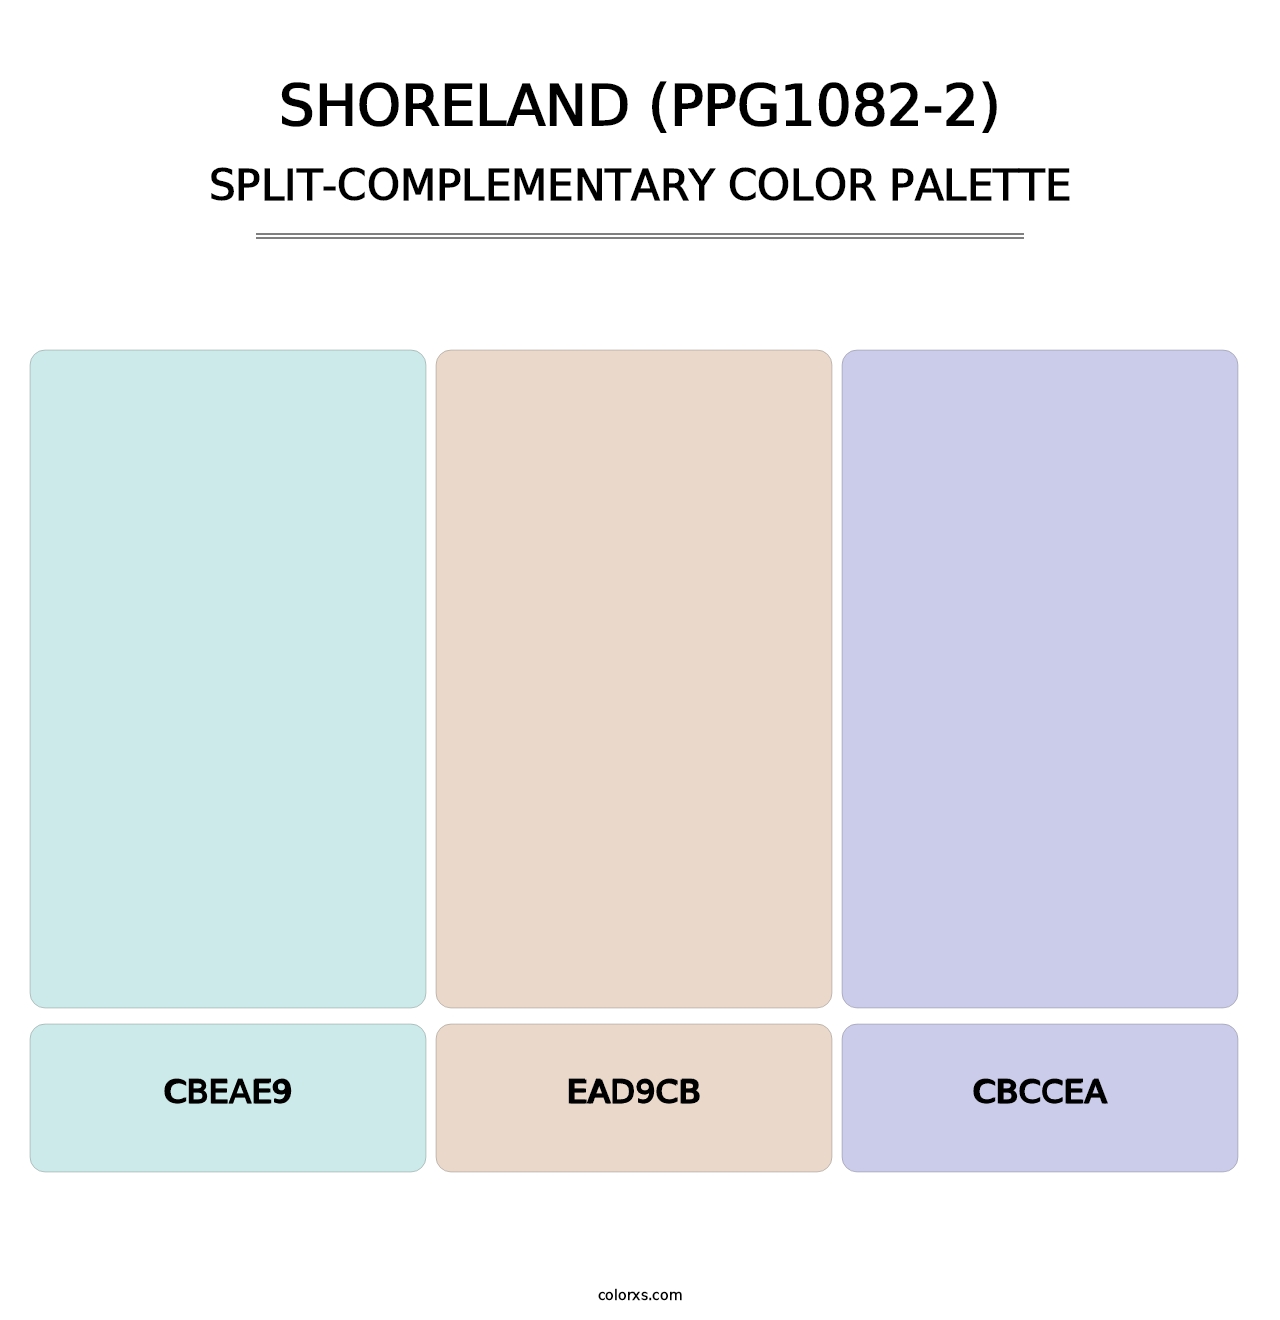 Shoreland (PPG1082-2) - Split-Complementary Color Palette